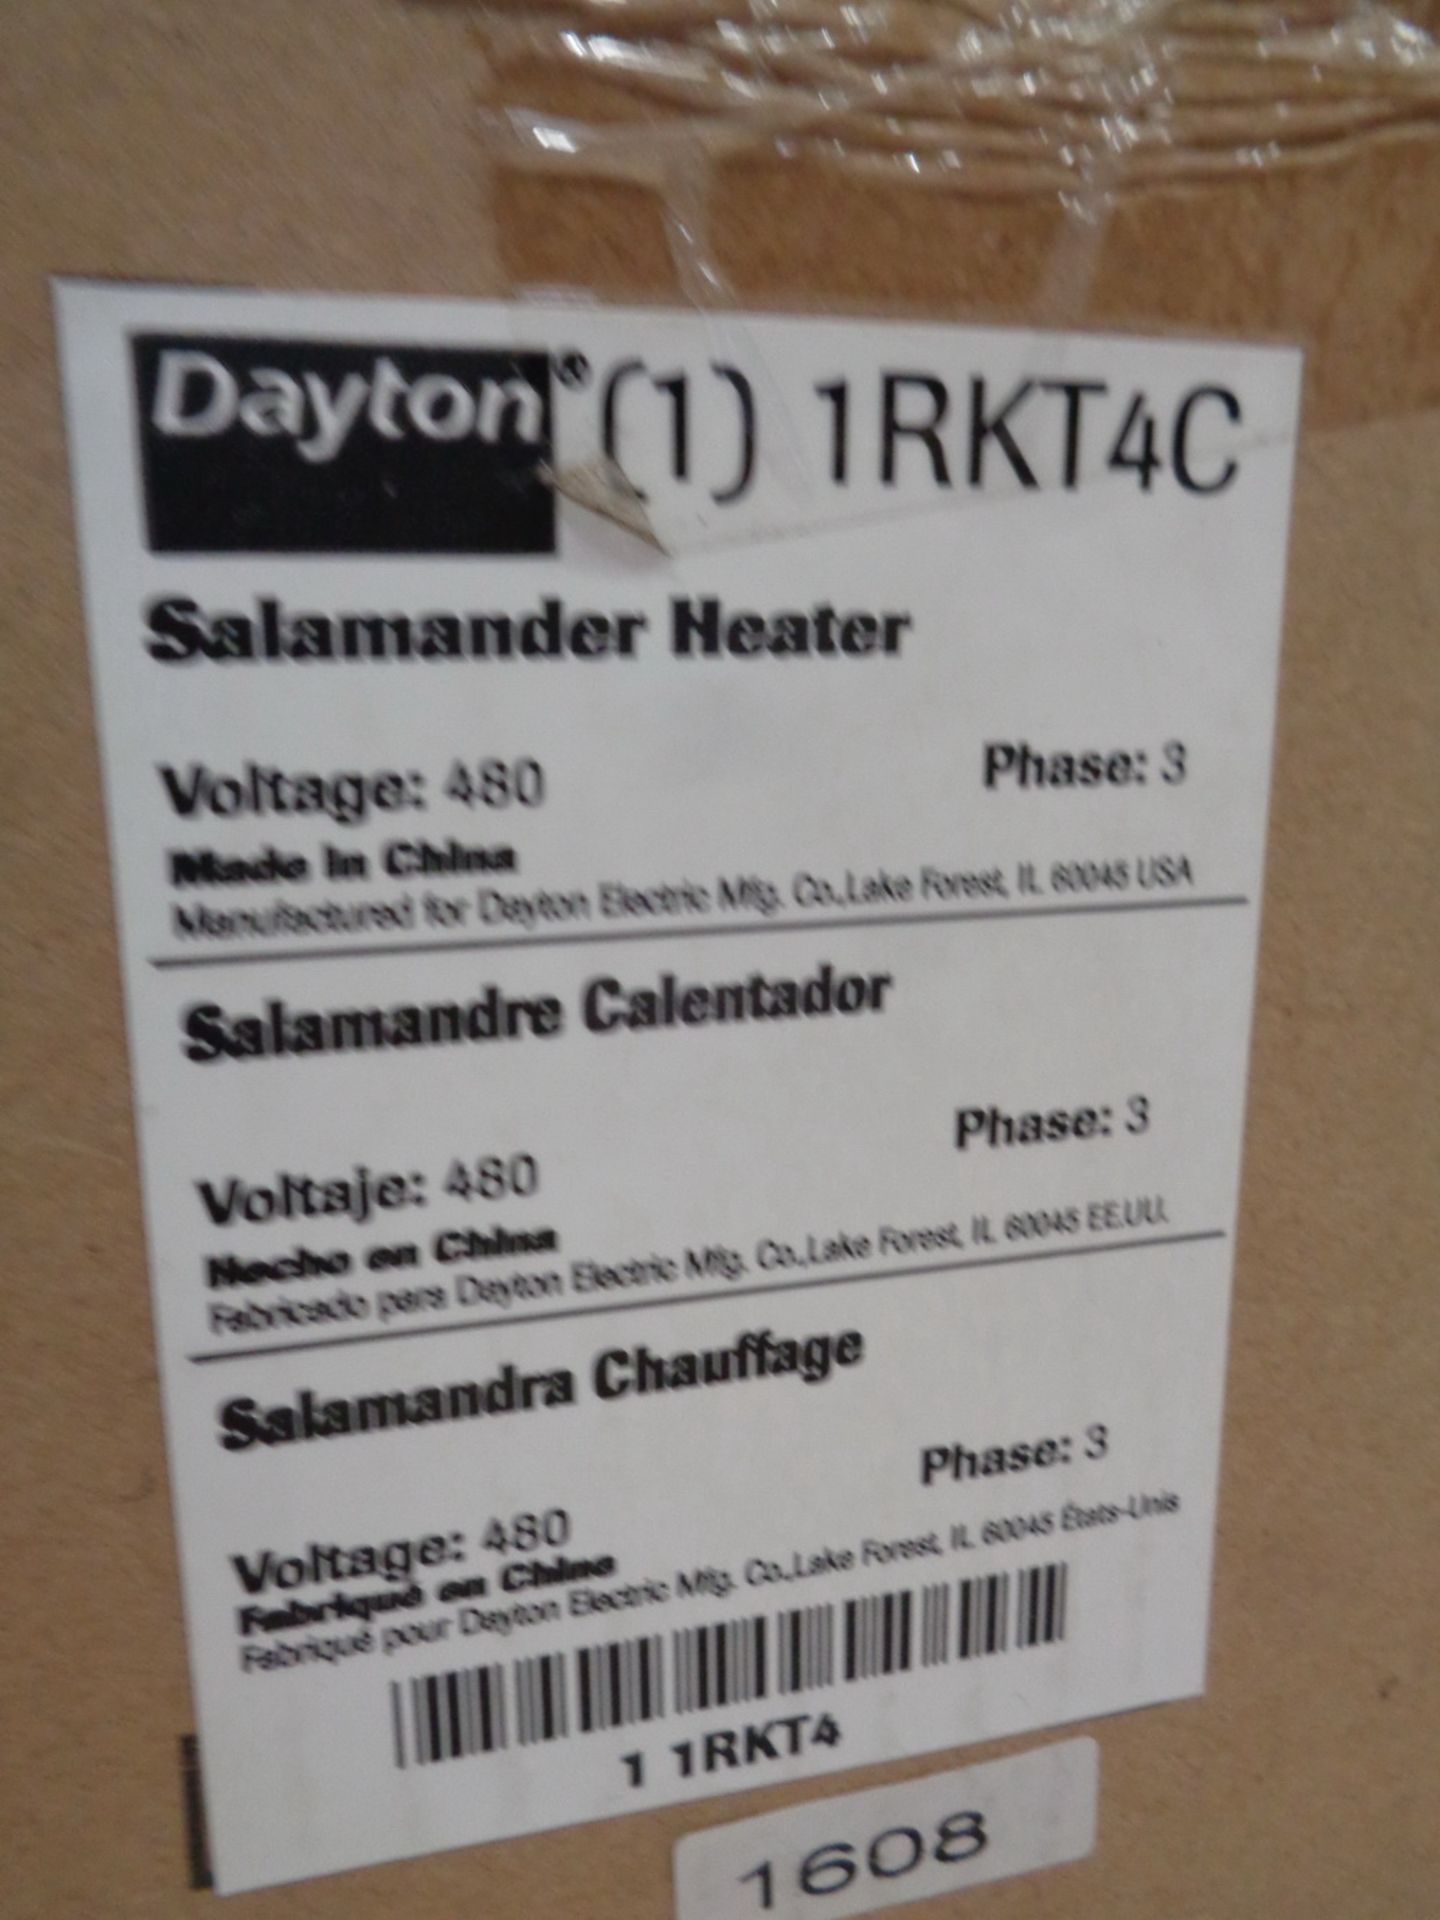 UNUSED in New Box Dayton Salamander Electric Space Heater 1RKT4C - Image 4 of 5